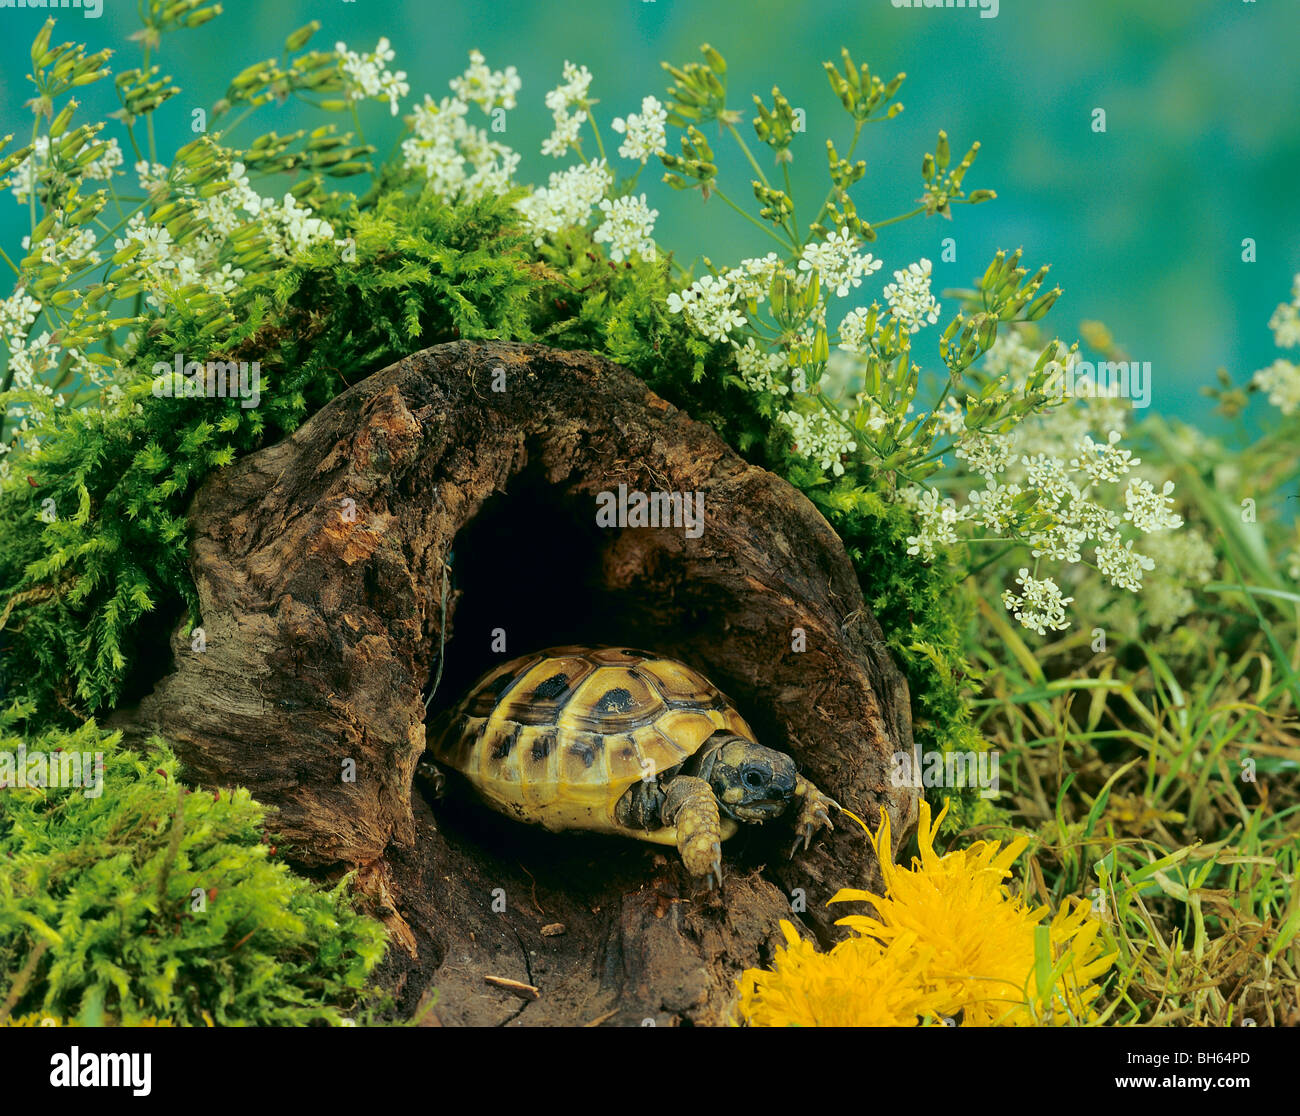 hermanns-tortoise-in-hiding-place-testudo-hermanni-BH64PD.jpg